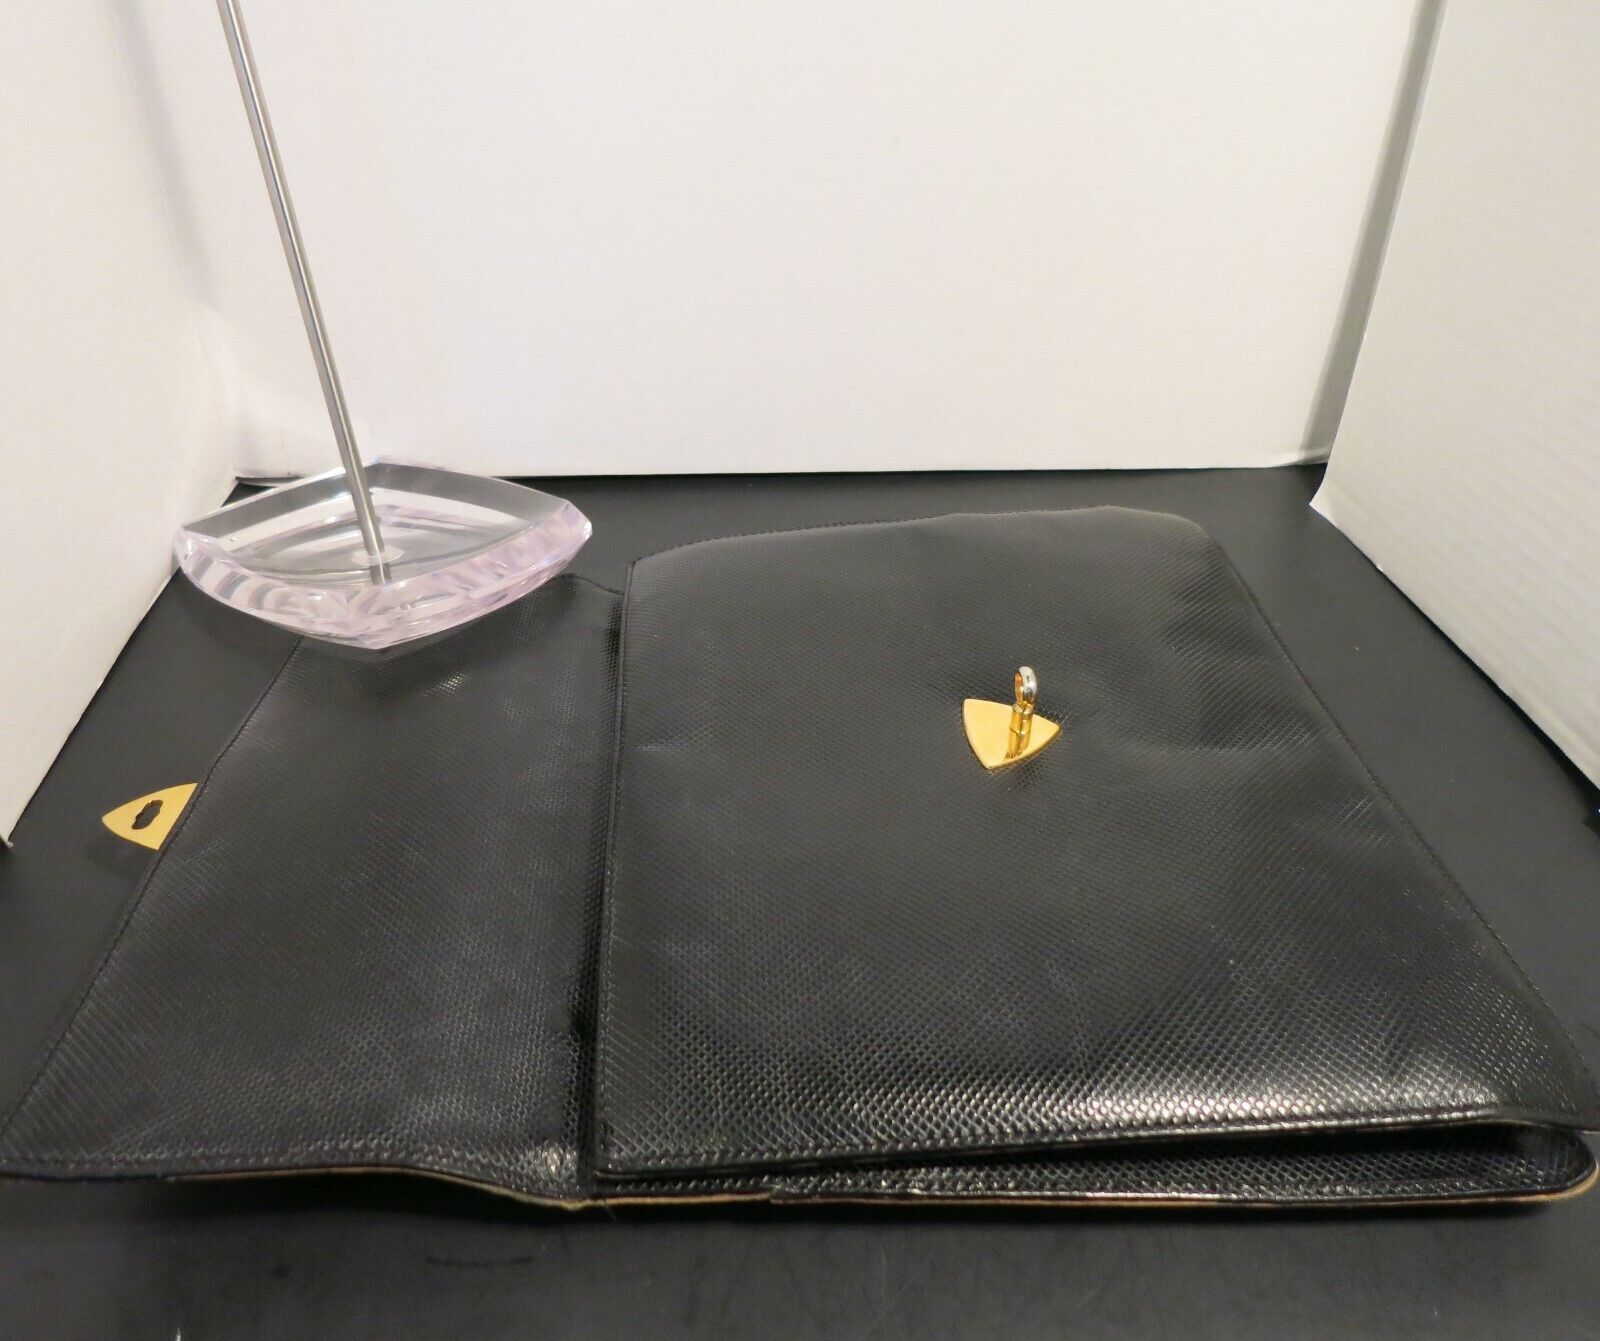 Veneta leather handbag Bottega Veneta Black in Leather - 35383300